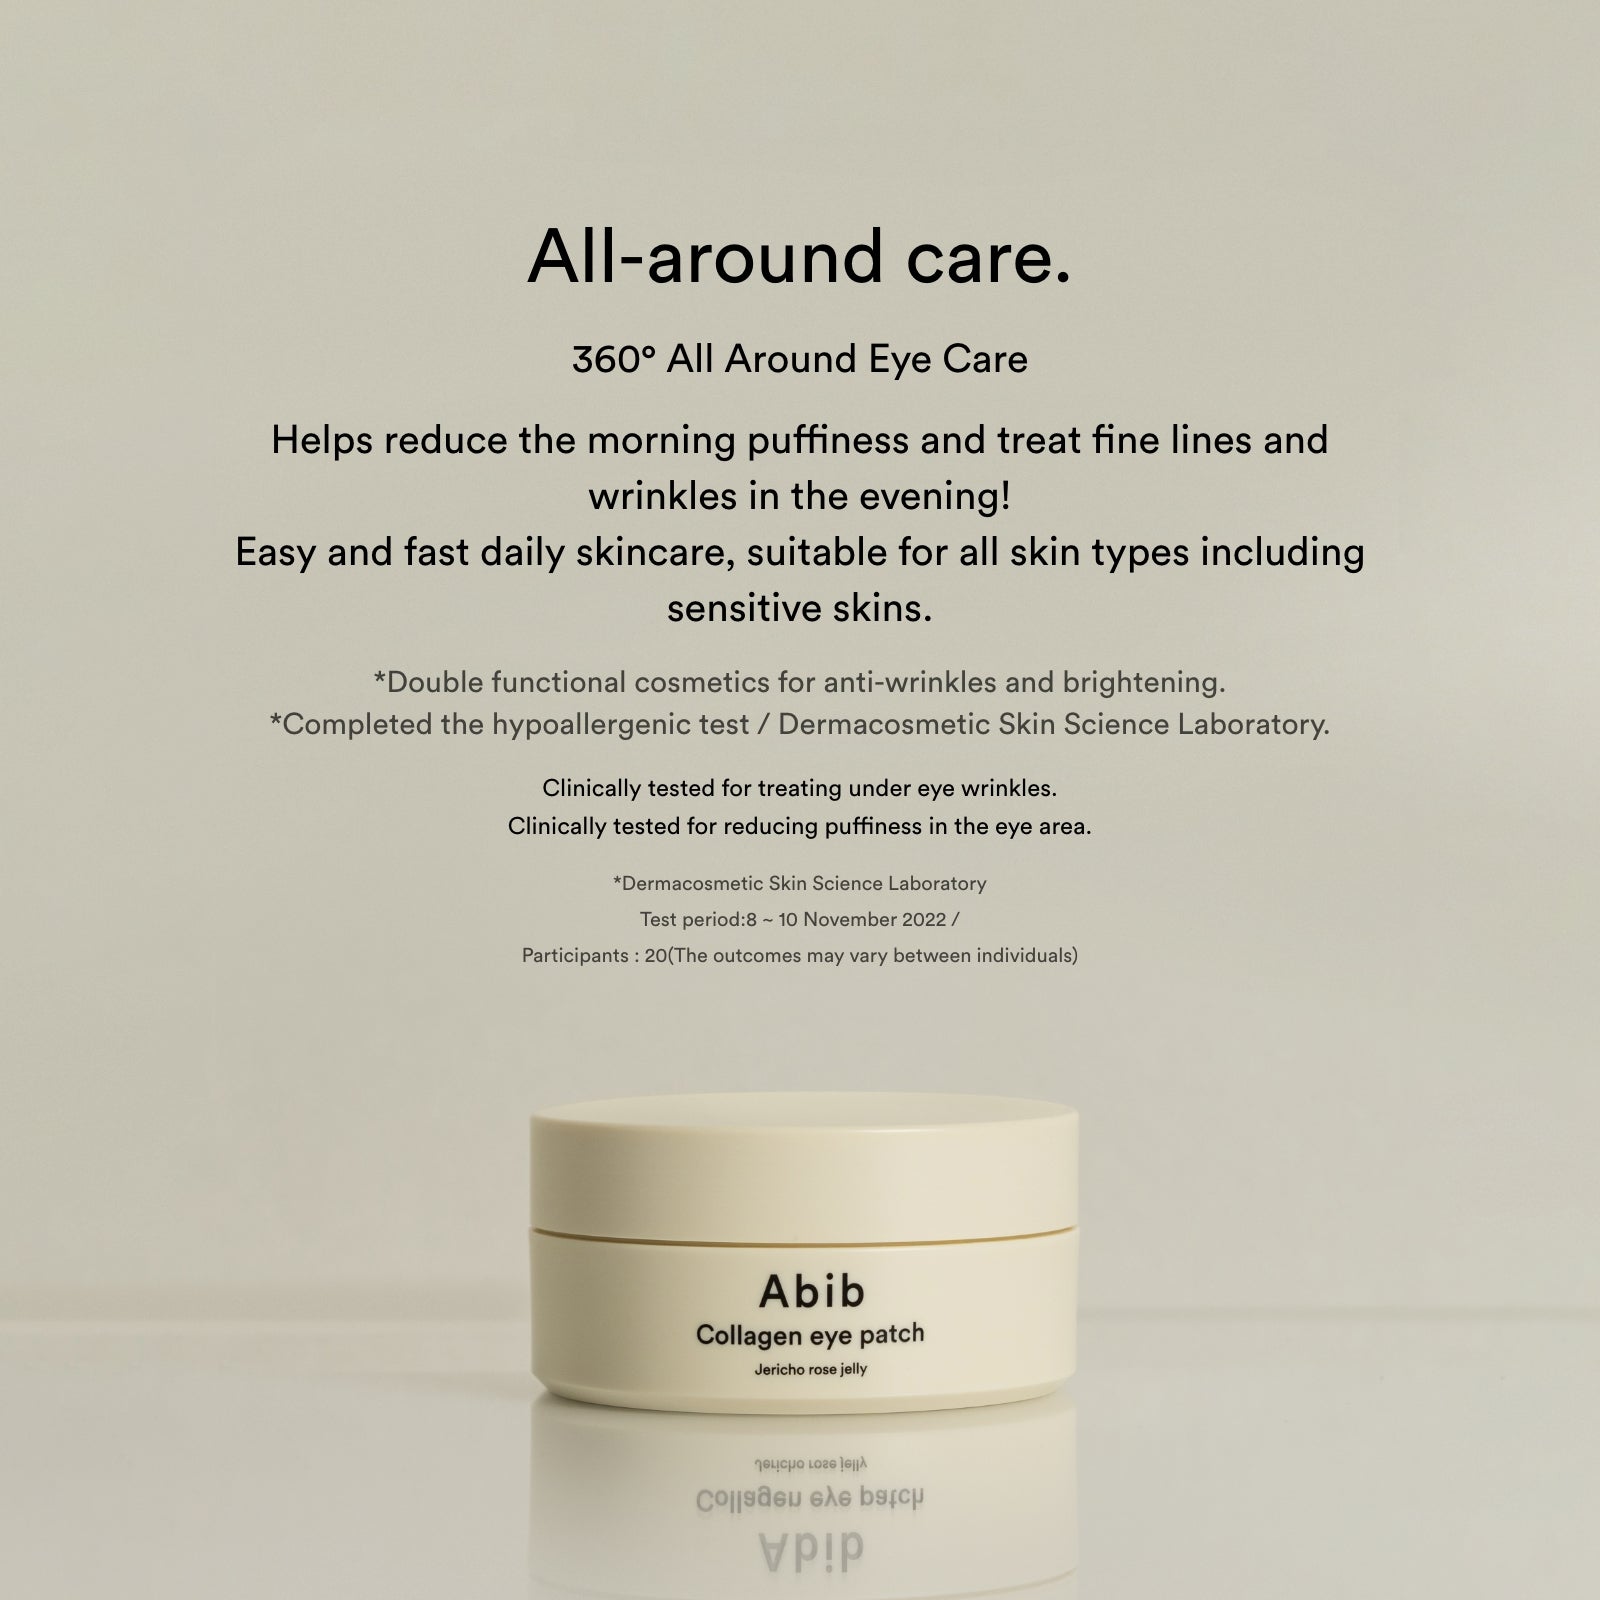 Abib Collagen Eye Patch Jericho Rose Jelly 60pcs - Abib | Kiokii and...